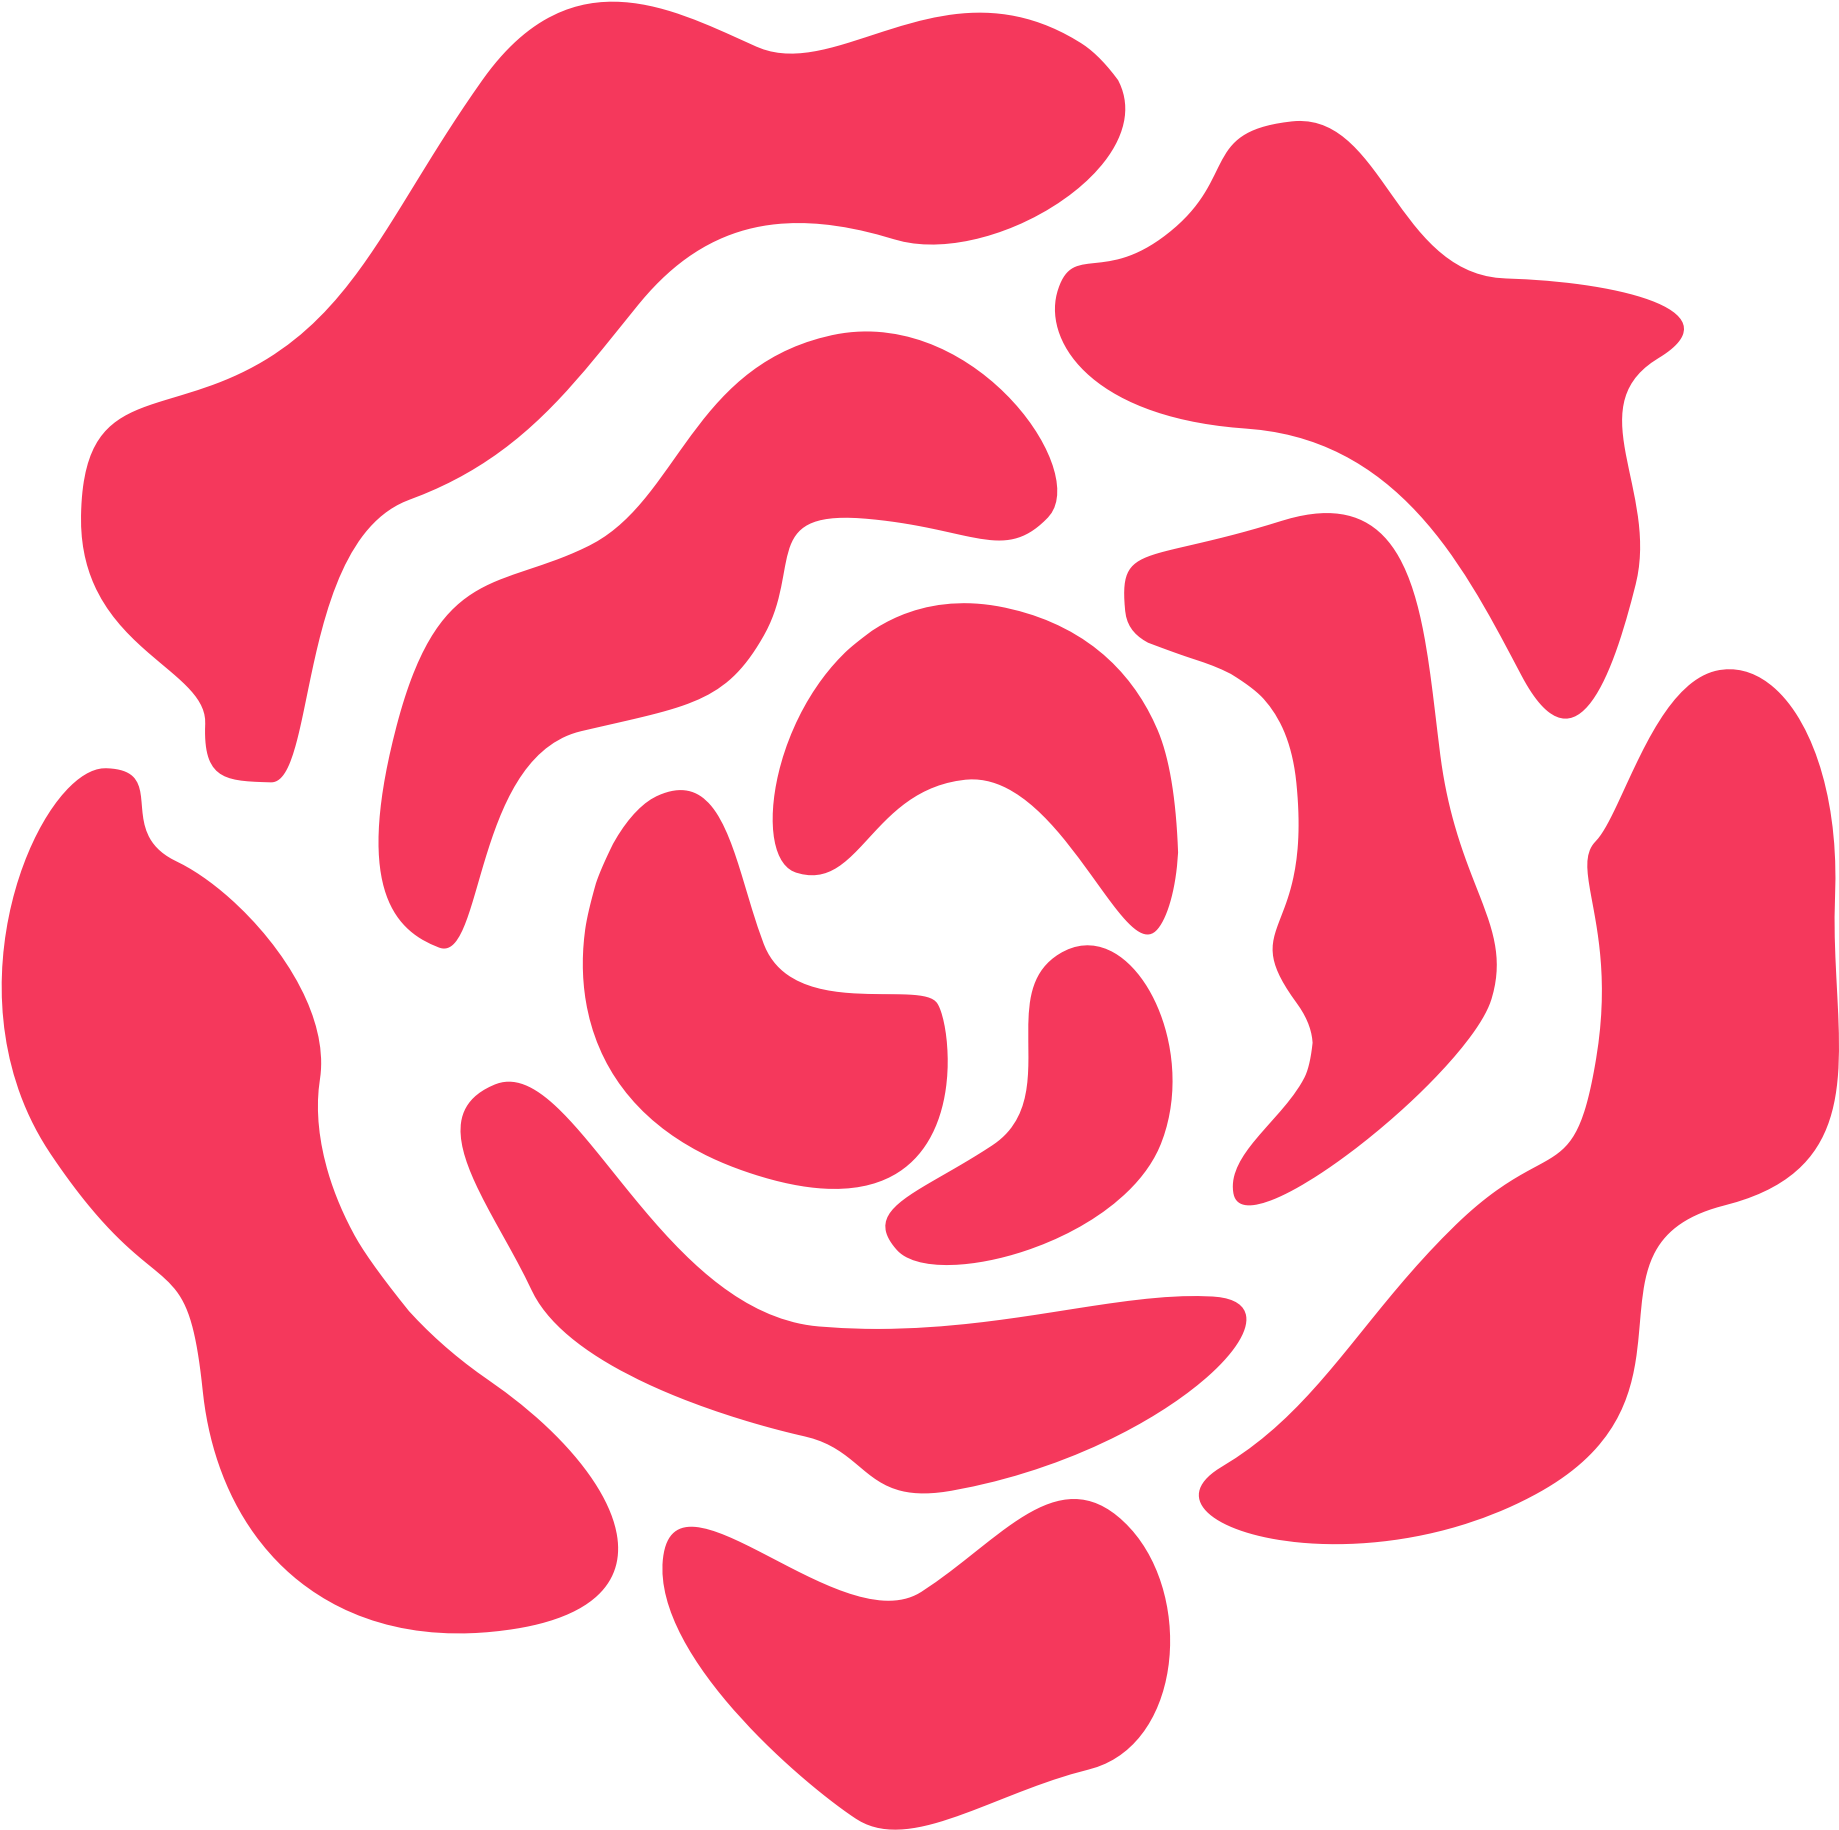 F2u Pink Rose Background By Sketch Art 292002 - Pink Rose Stencil Button Badge Button Badge (2048x2048)